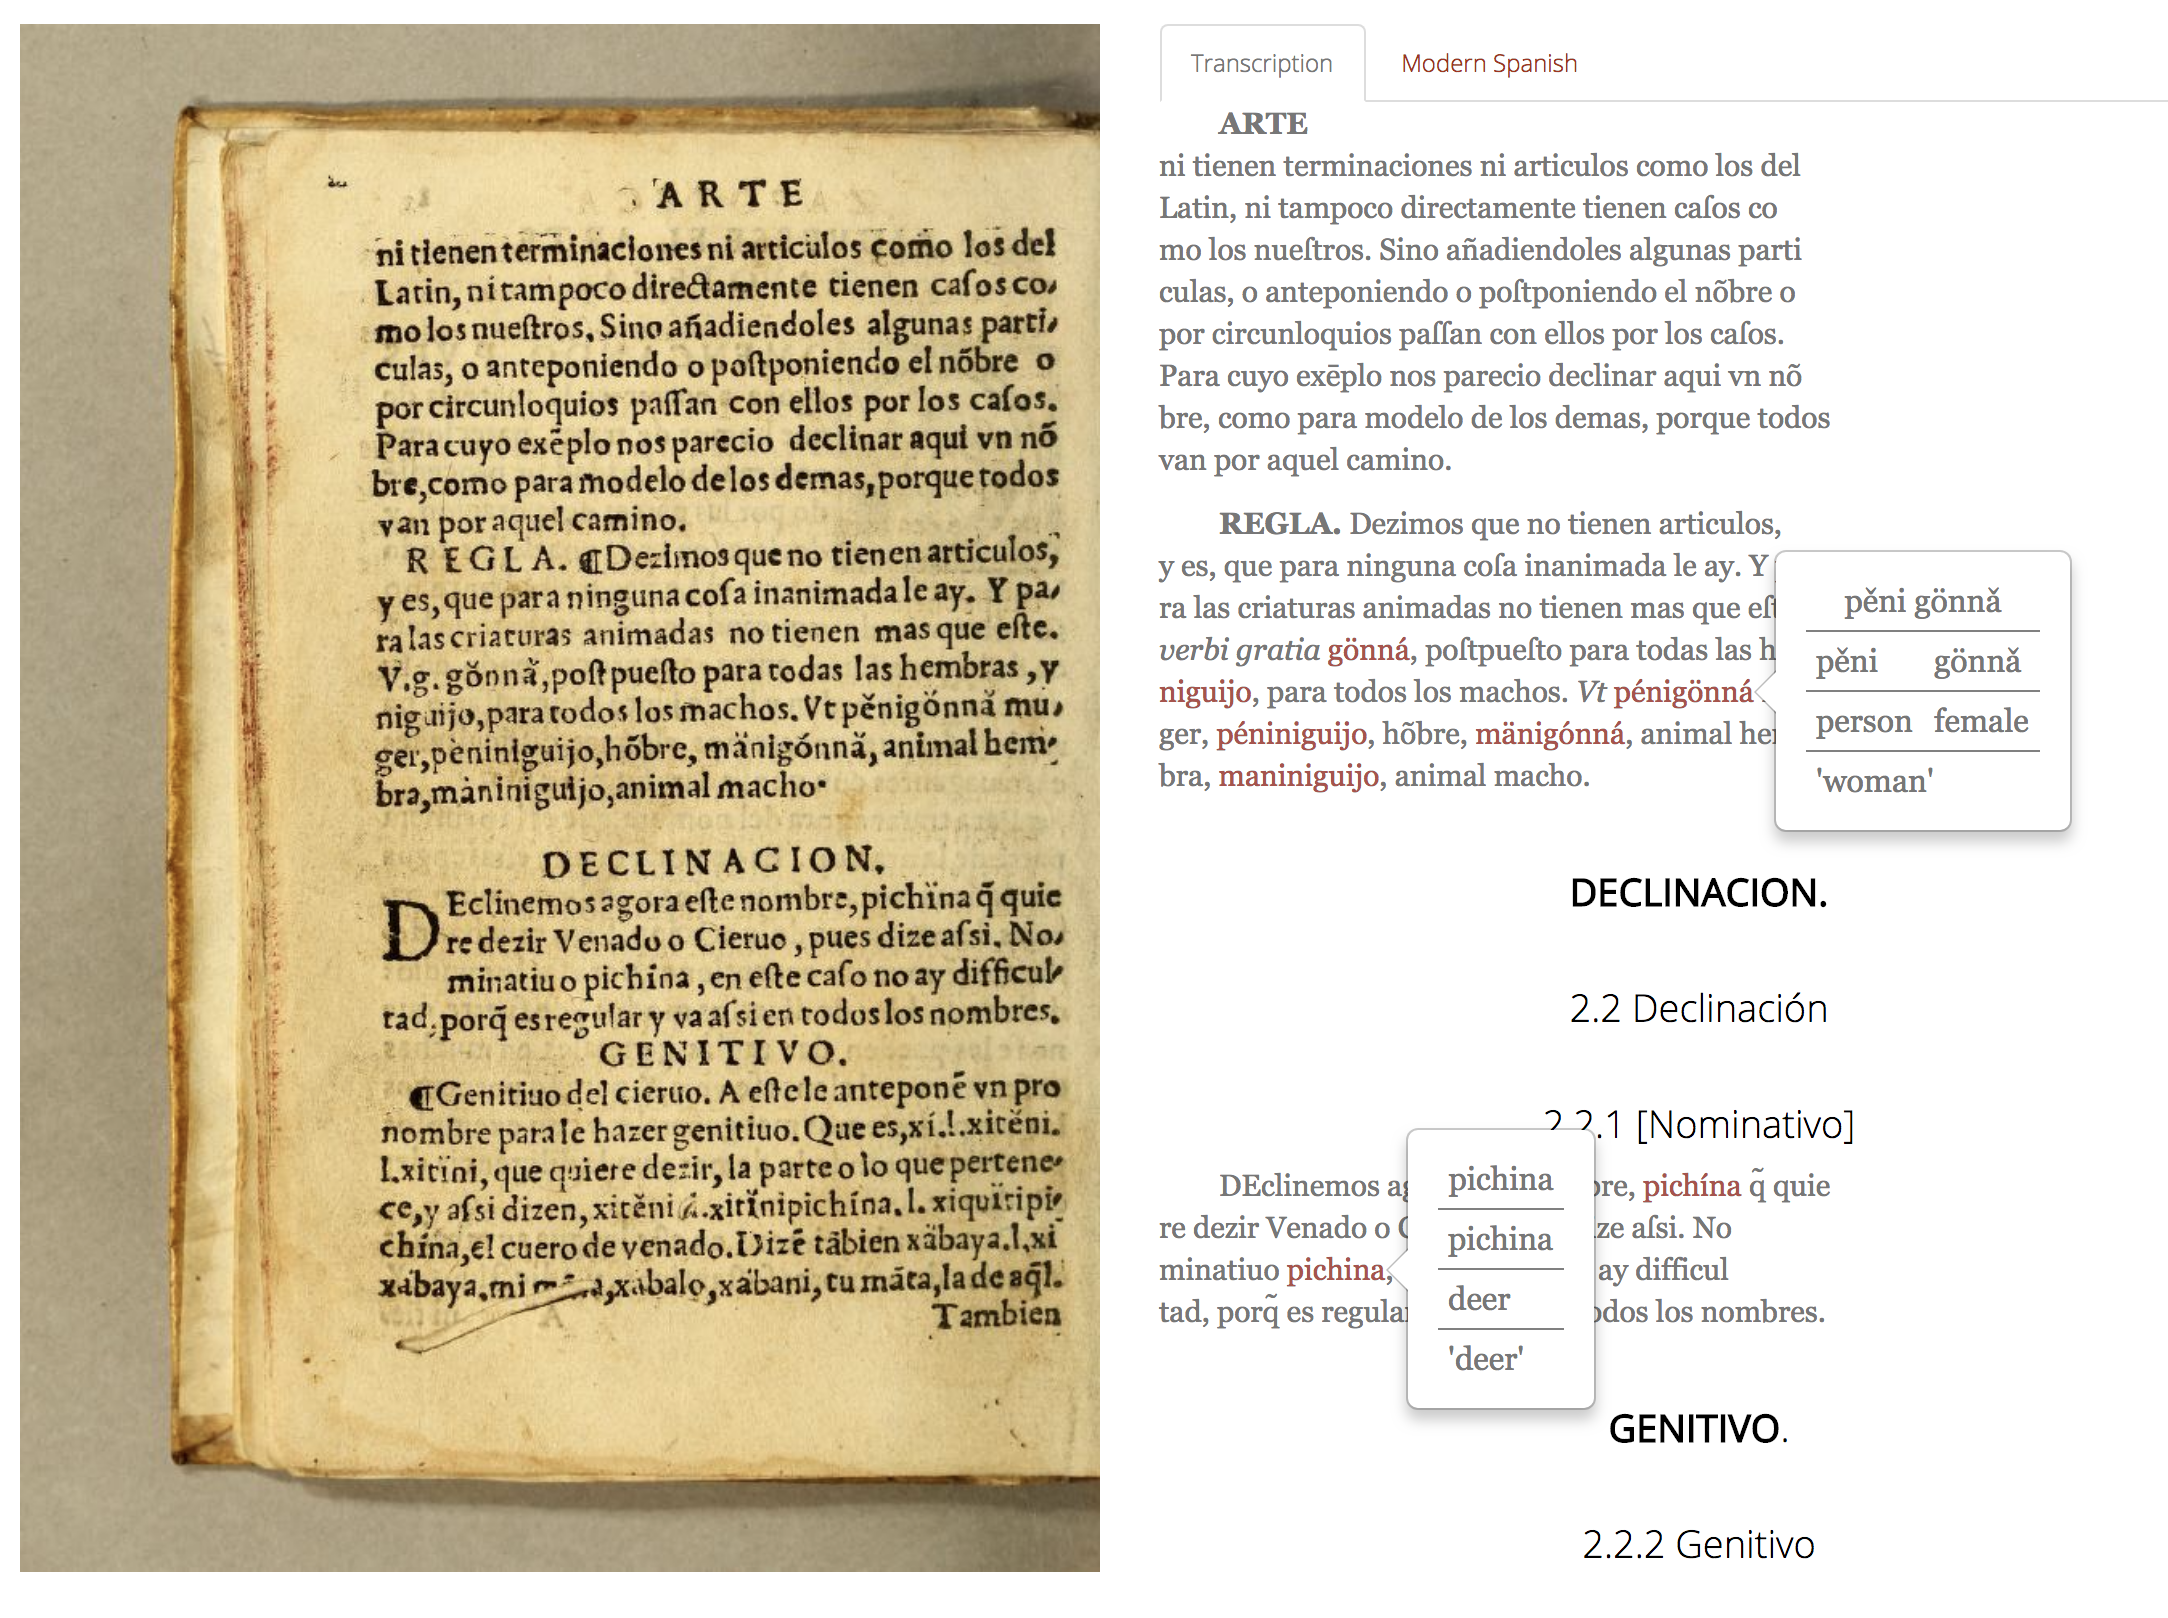 The original text and translation of Corova's Arte.